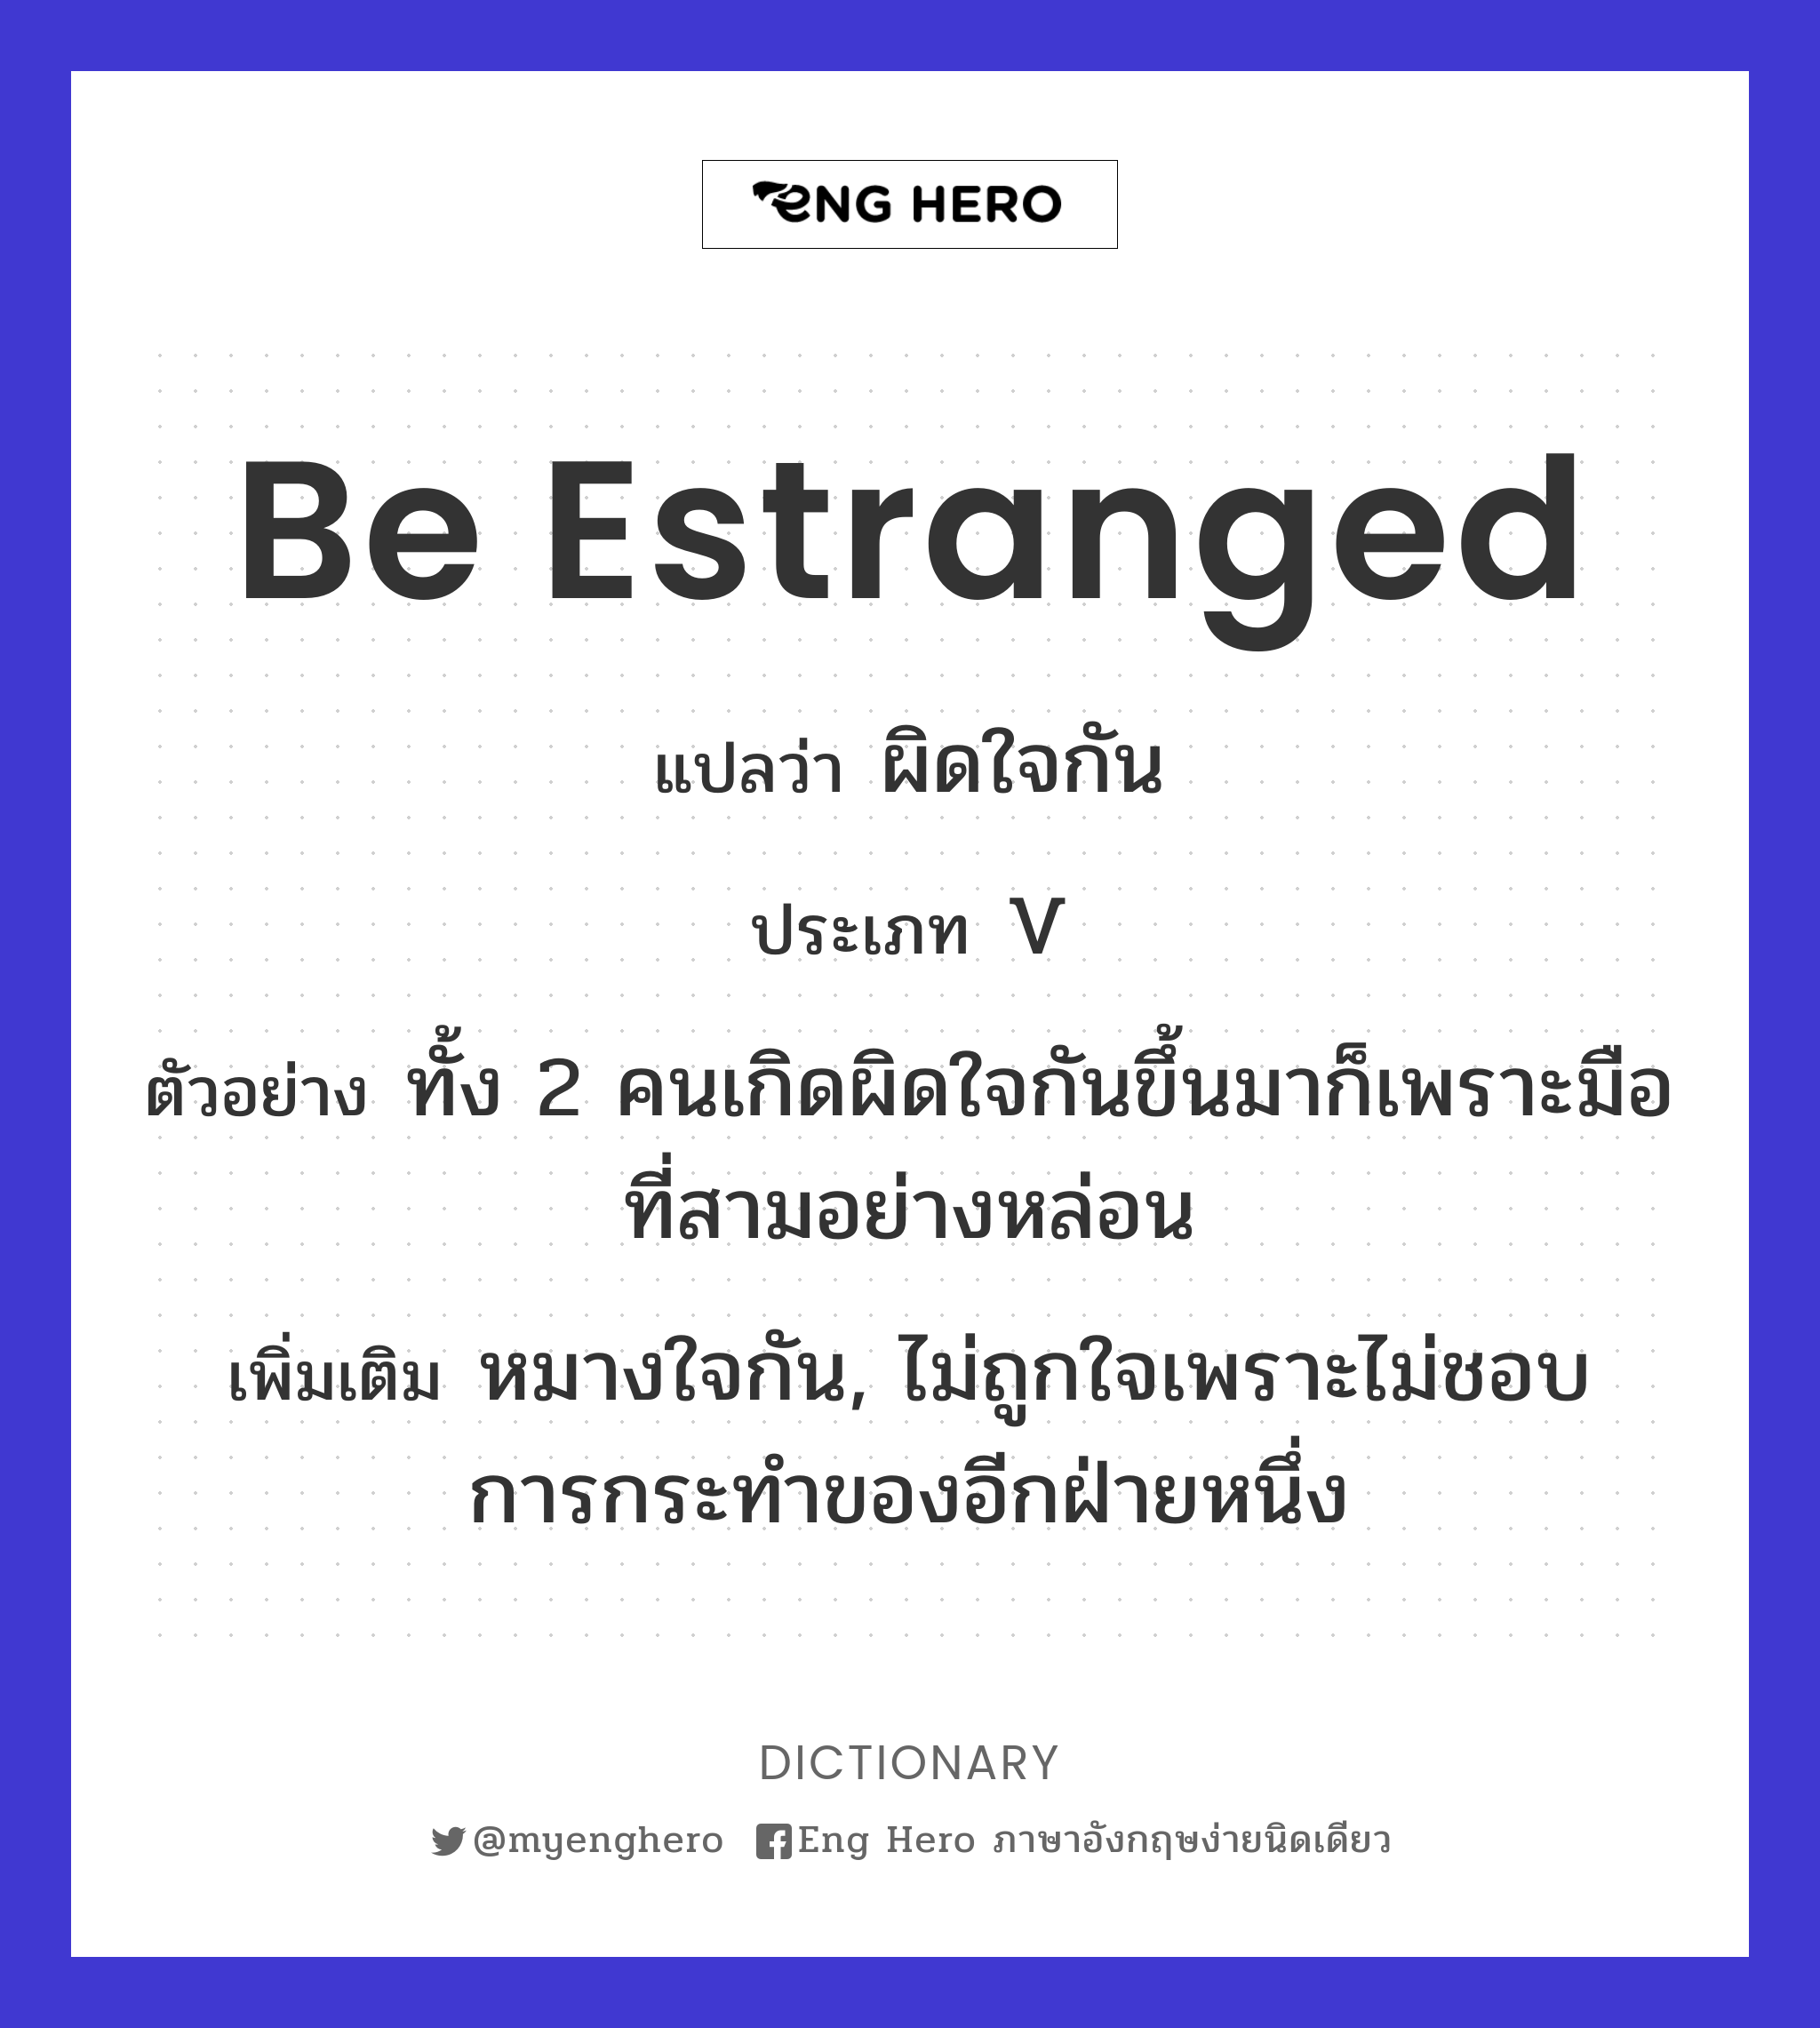 be estranged